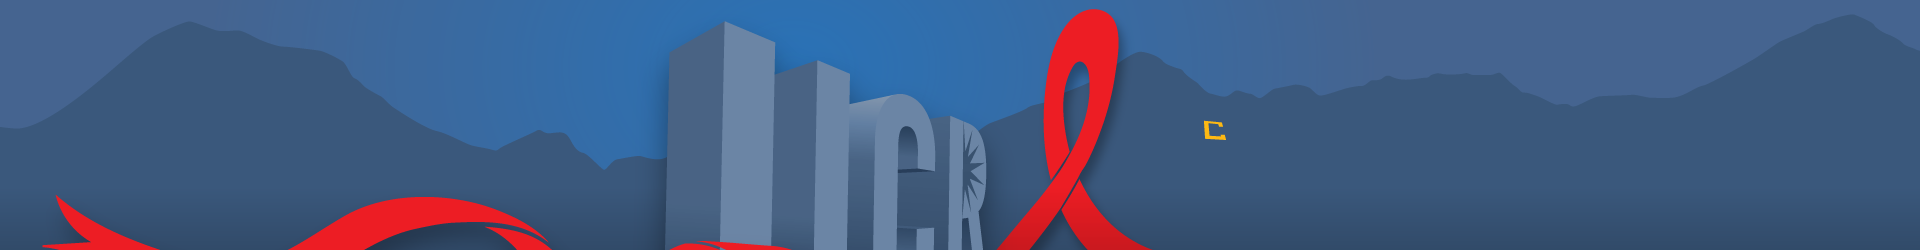 UCR Campus HIV/AIDS Resources